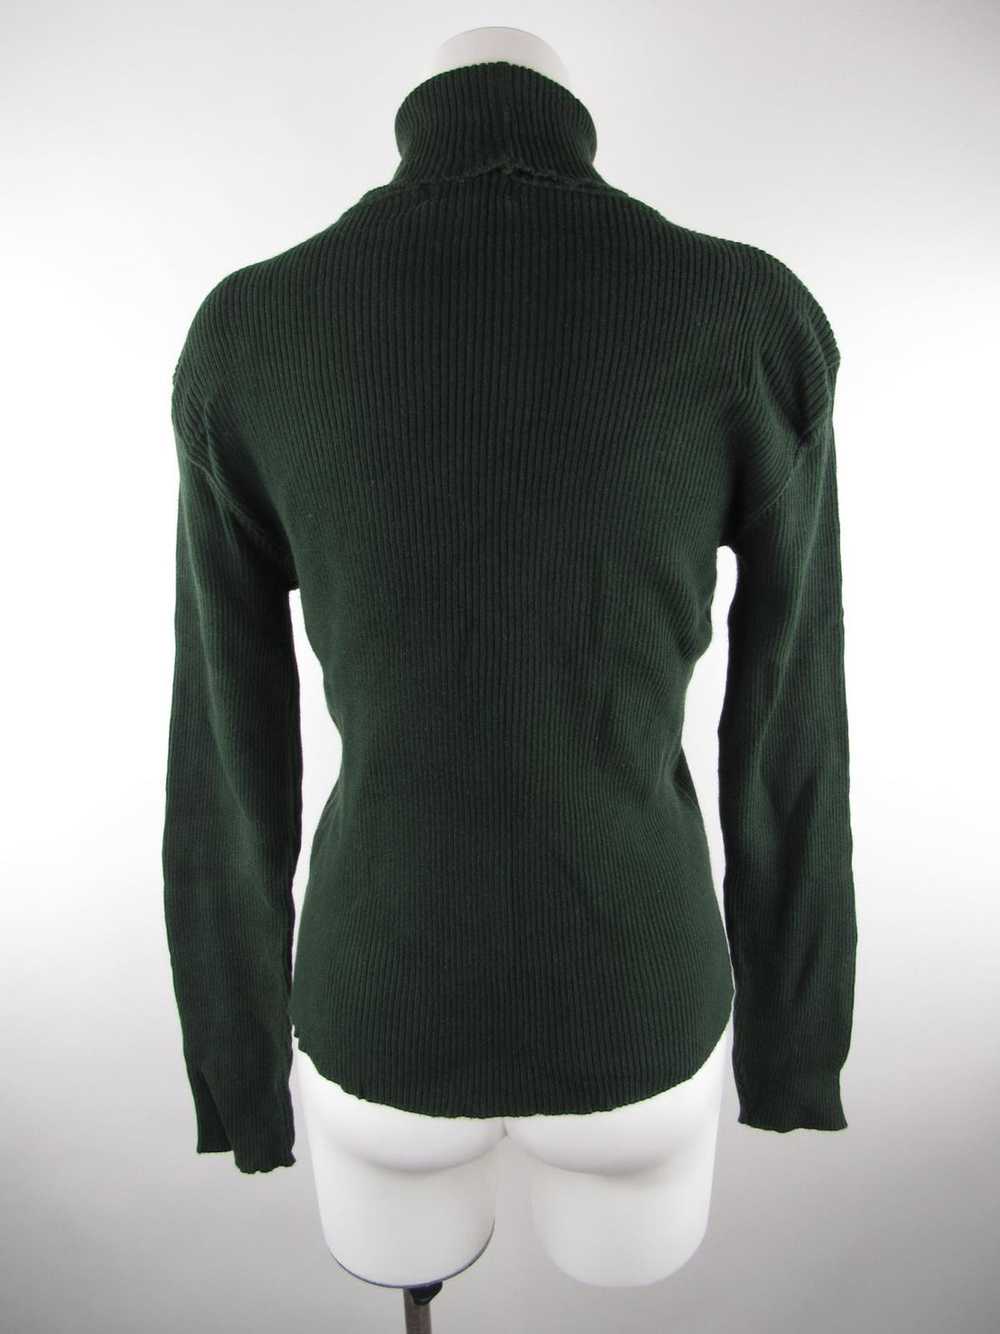 G.H. Bass & Co. Turtleneck Sweater - image 2